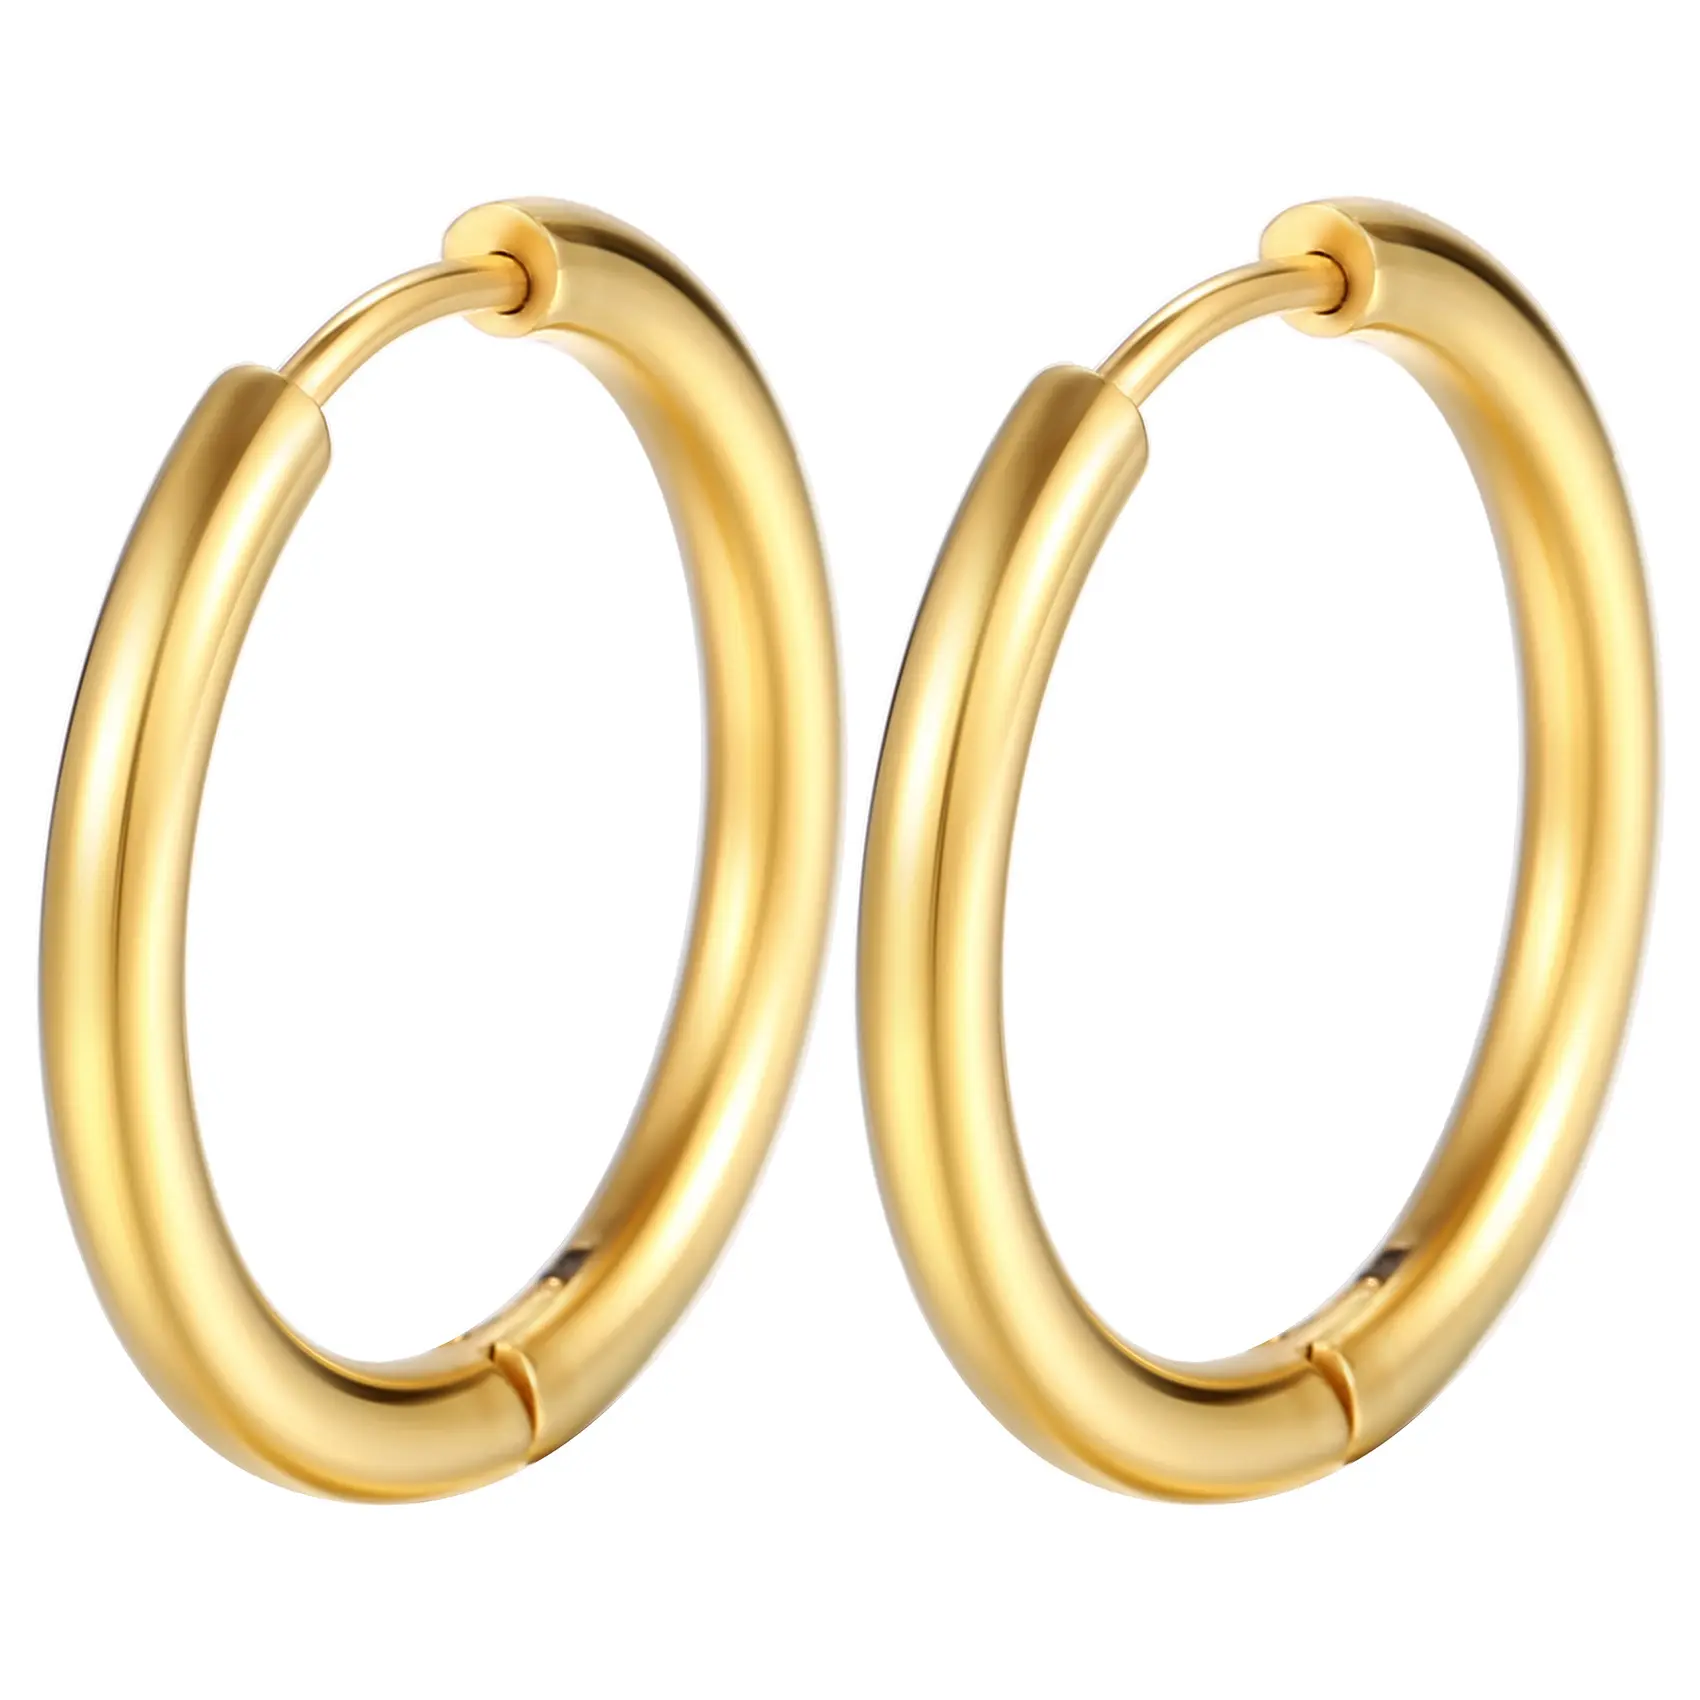 Free Tarnish Waterproof Stainless Steel Tiny Hoop Earrings Gold Plated 8MM Chic Huggie Earrings For Women